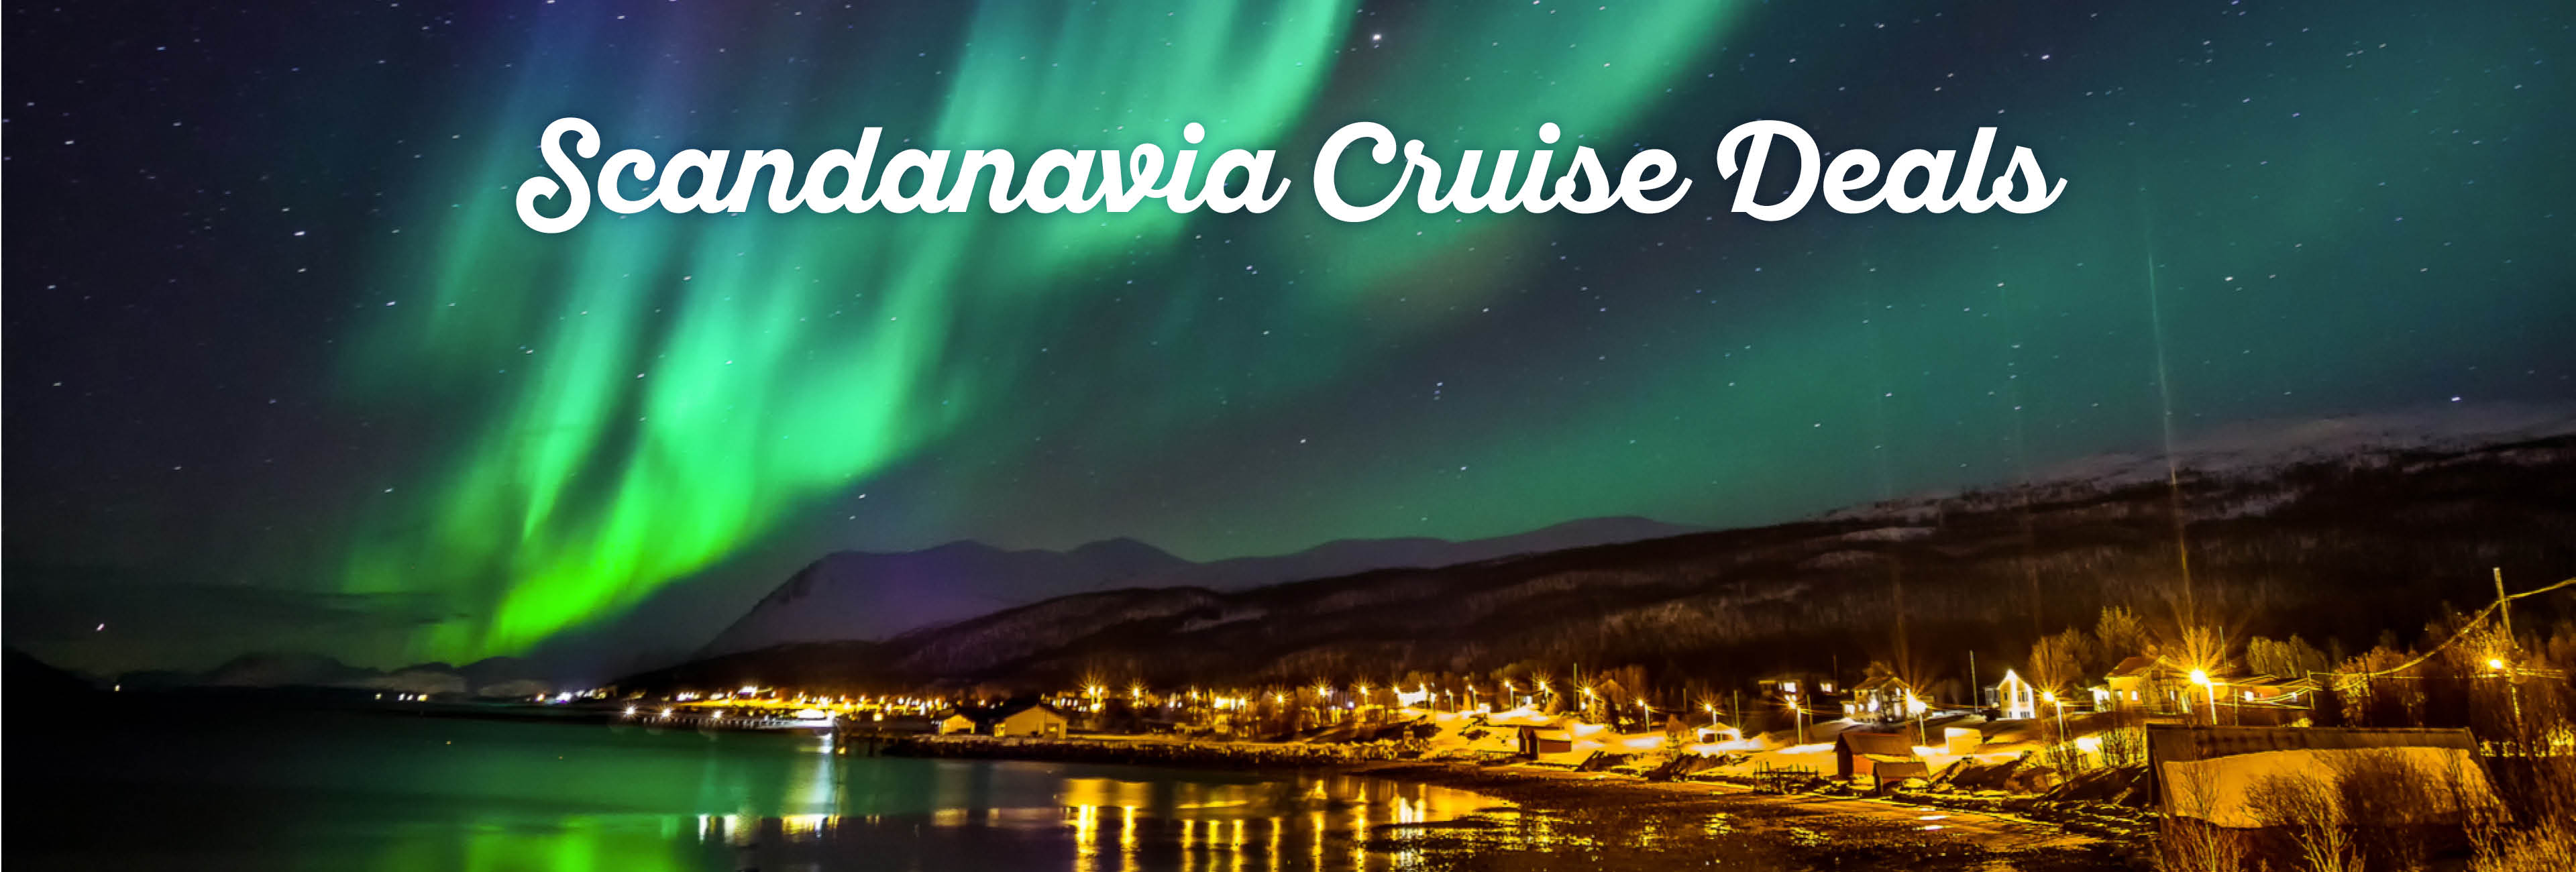 scandanavia-cruise-deals1.jpg